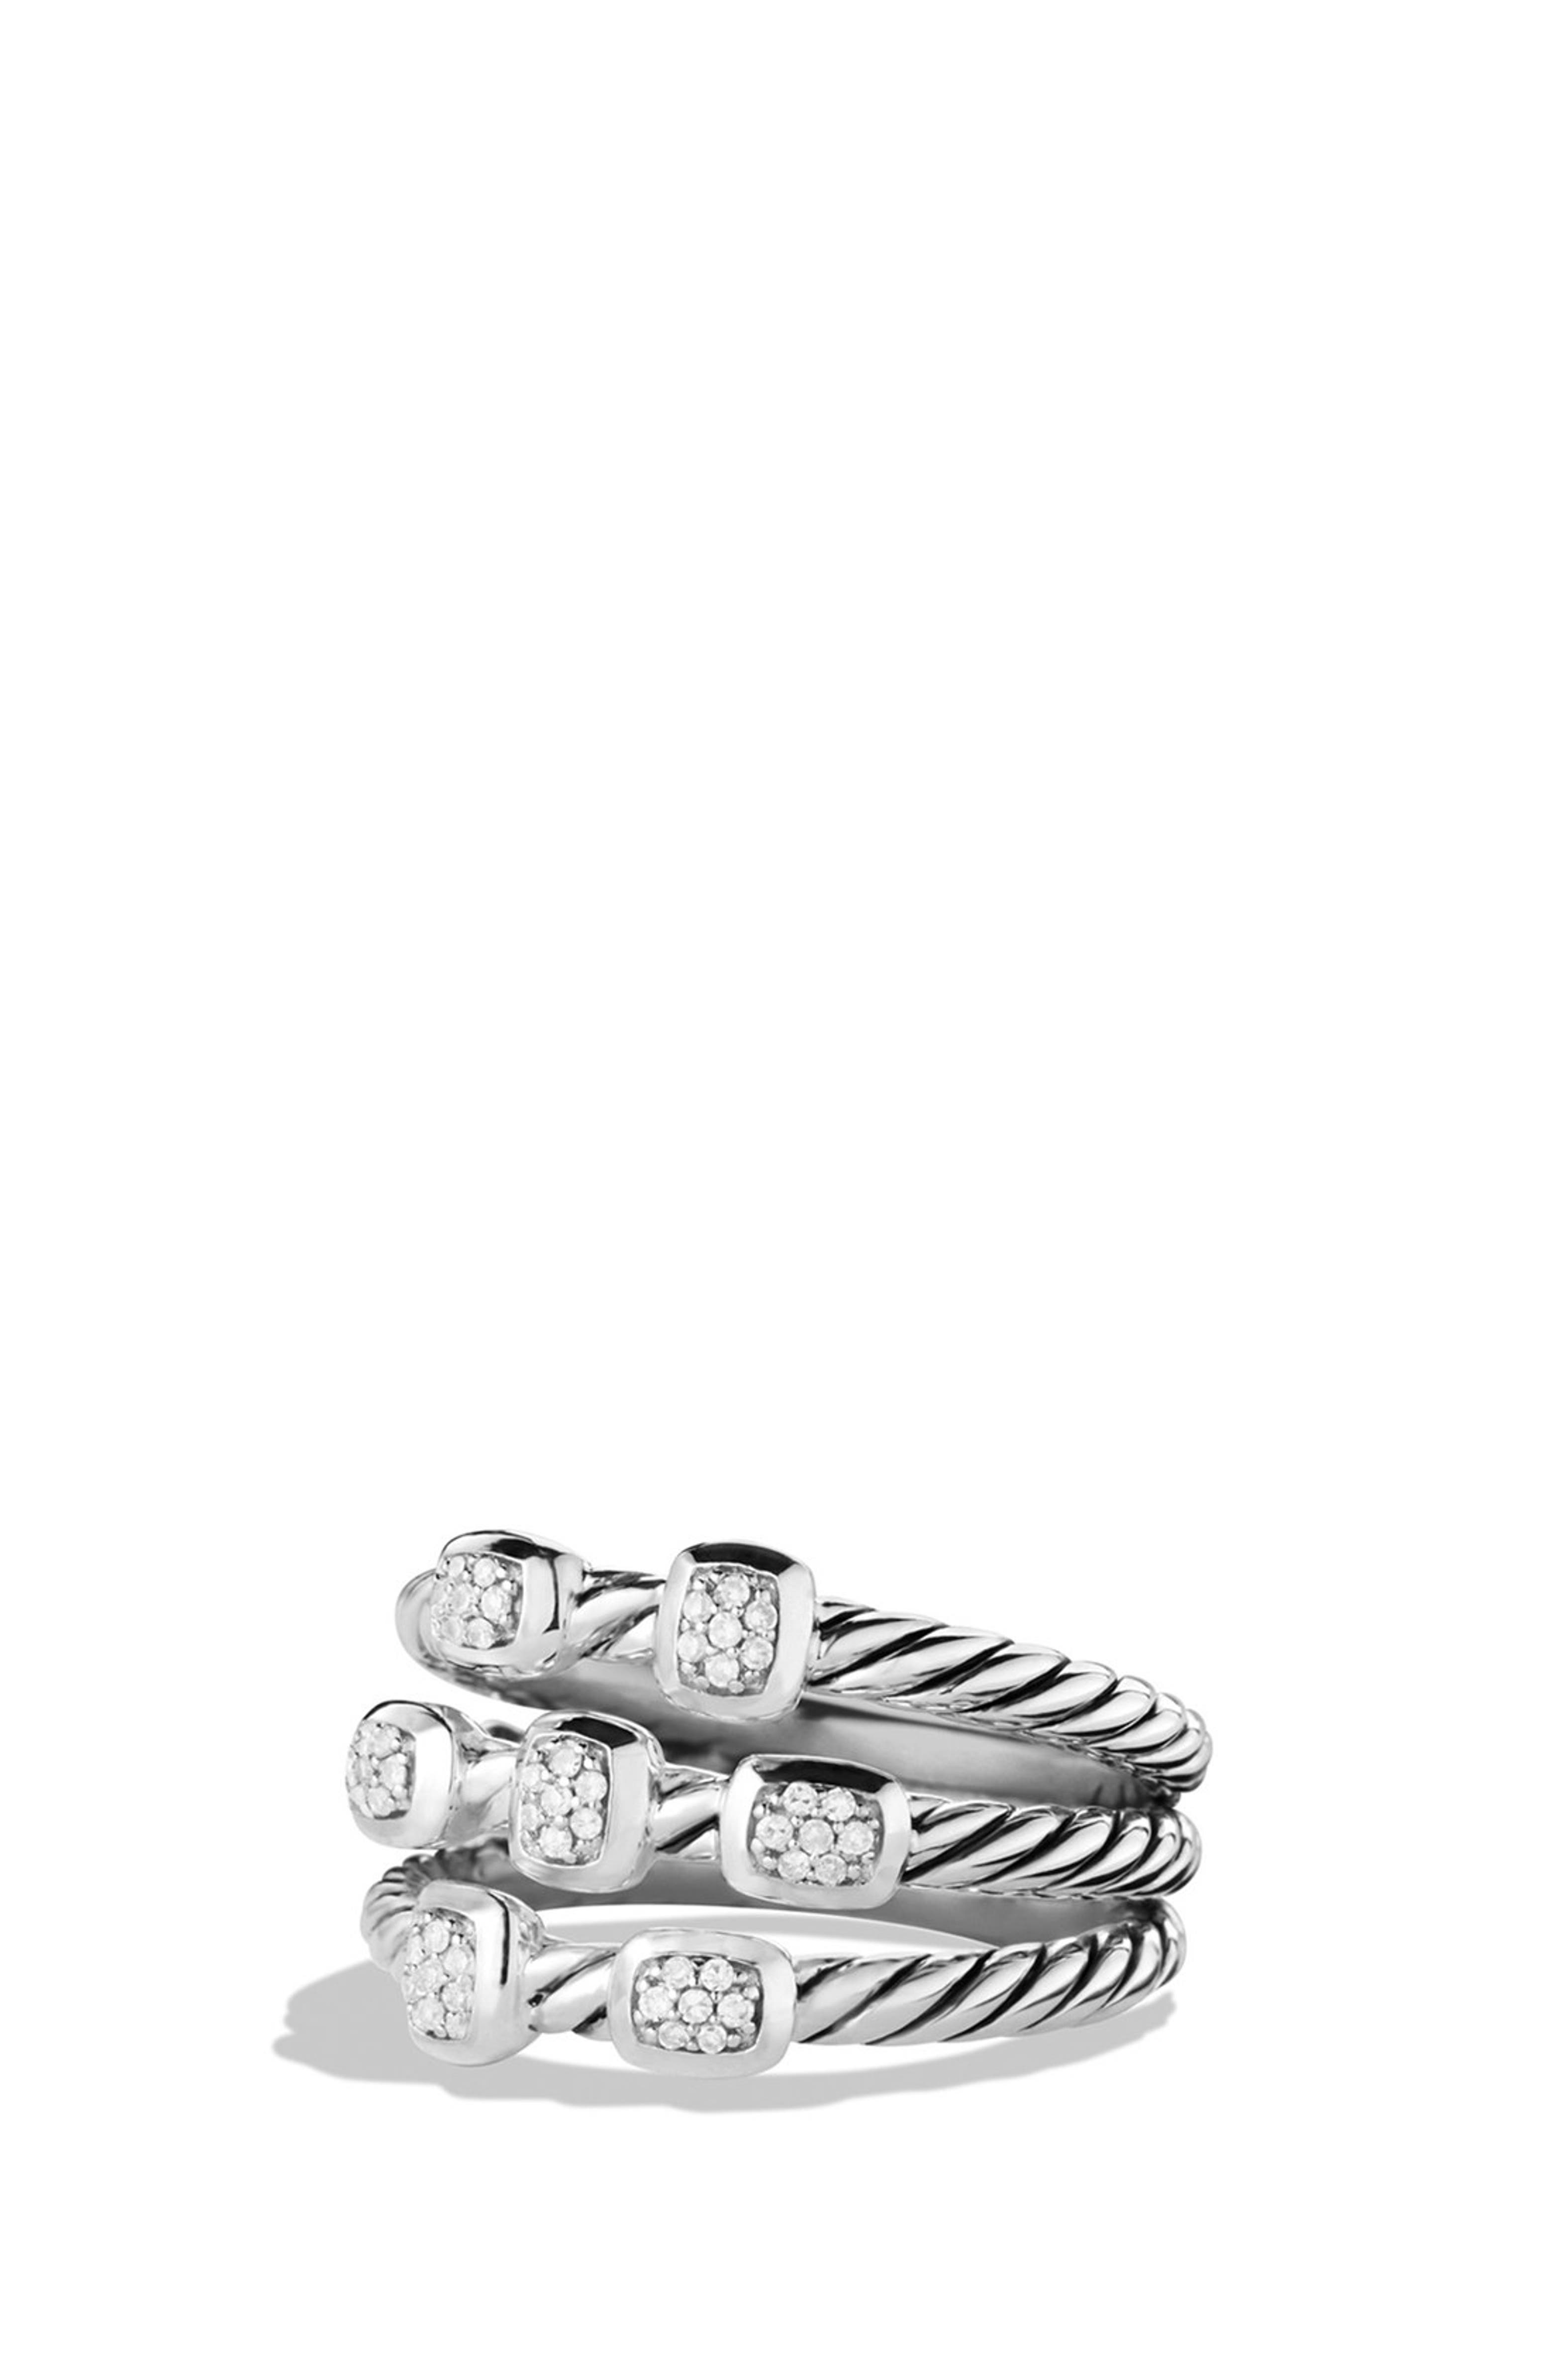 David Yurman 'Confetti' Ring with Diamonds | Nordstrom